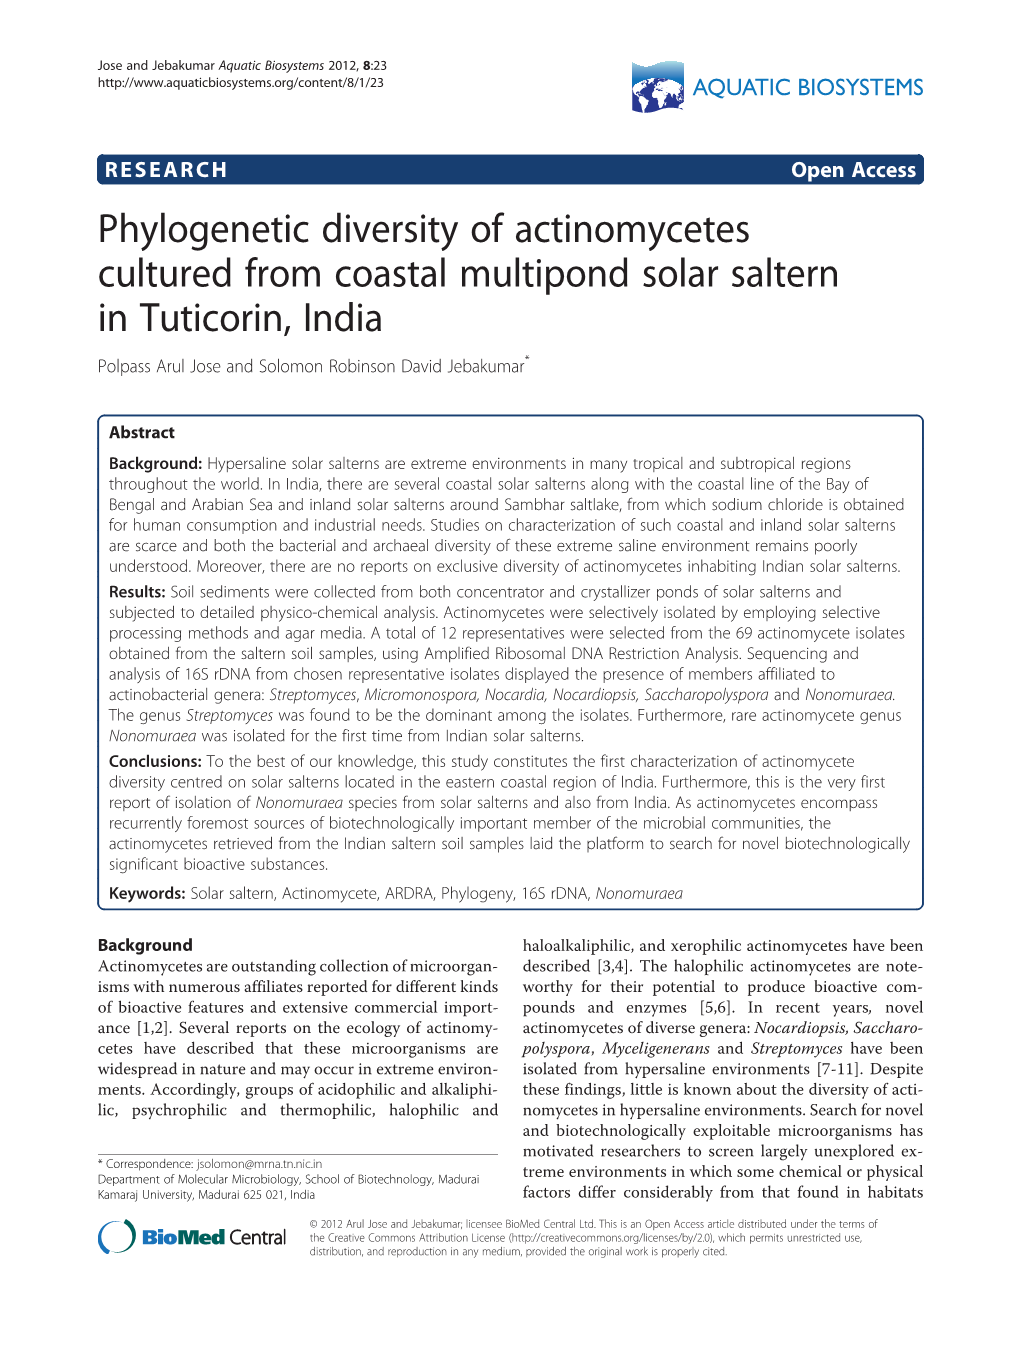 Phylogenetic Diversity of Actinomycetes Cultured from Coastal Multipond Solar Saltern in Tuticorin, India Polpass Arul Jose and Solomon Robinson David Jebakumar*